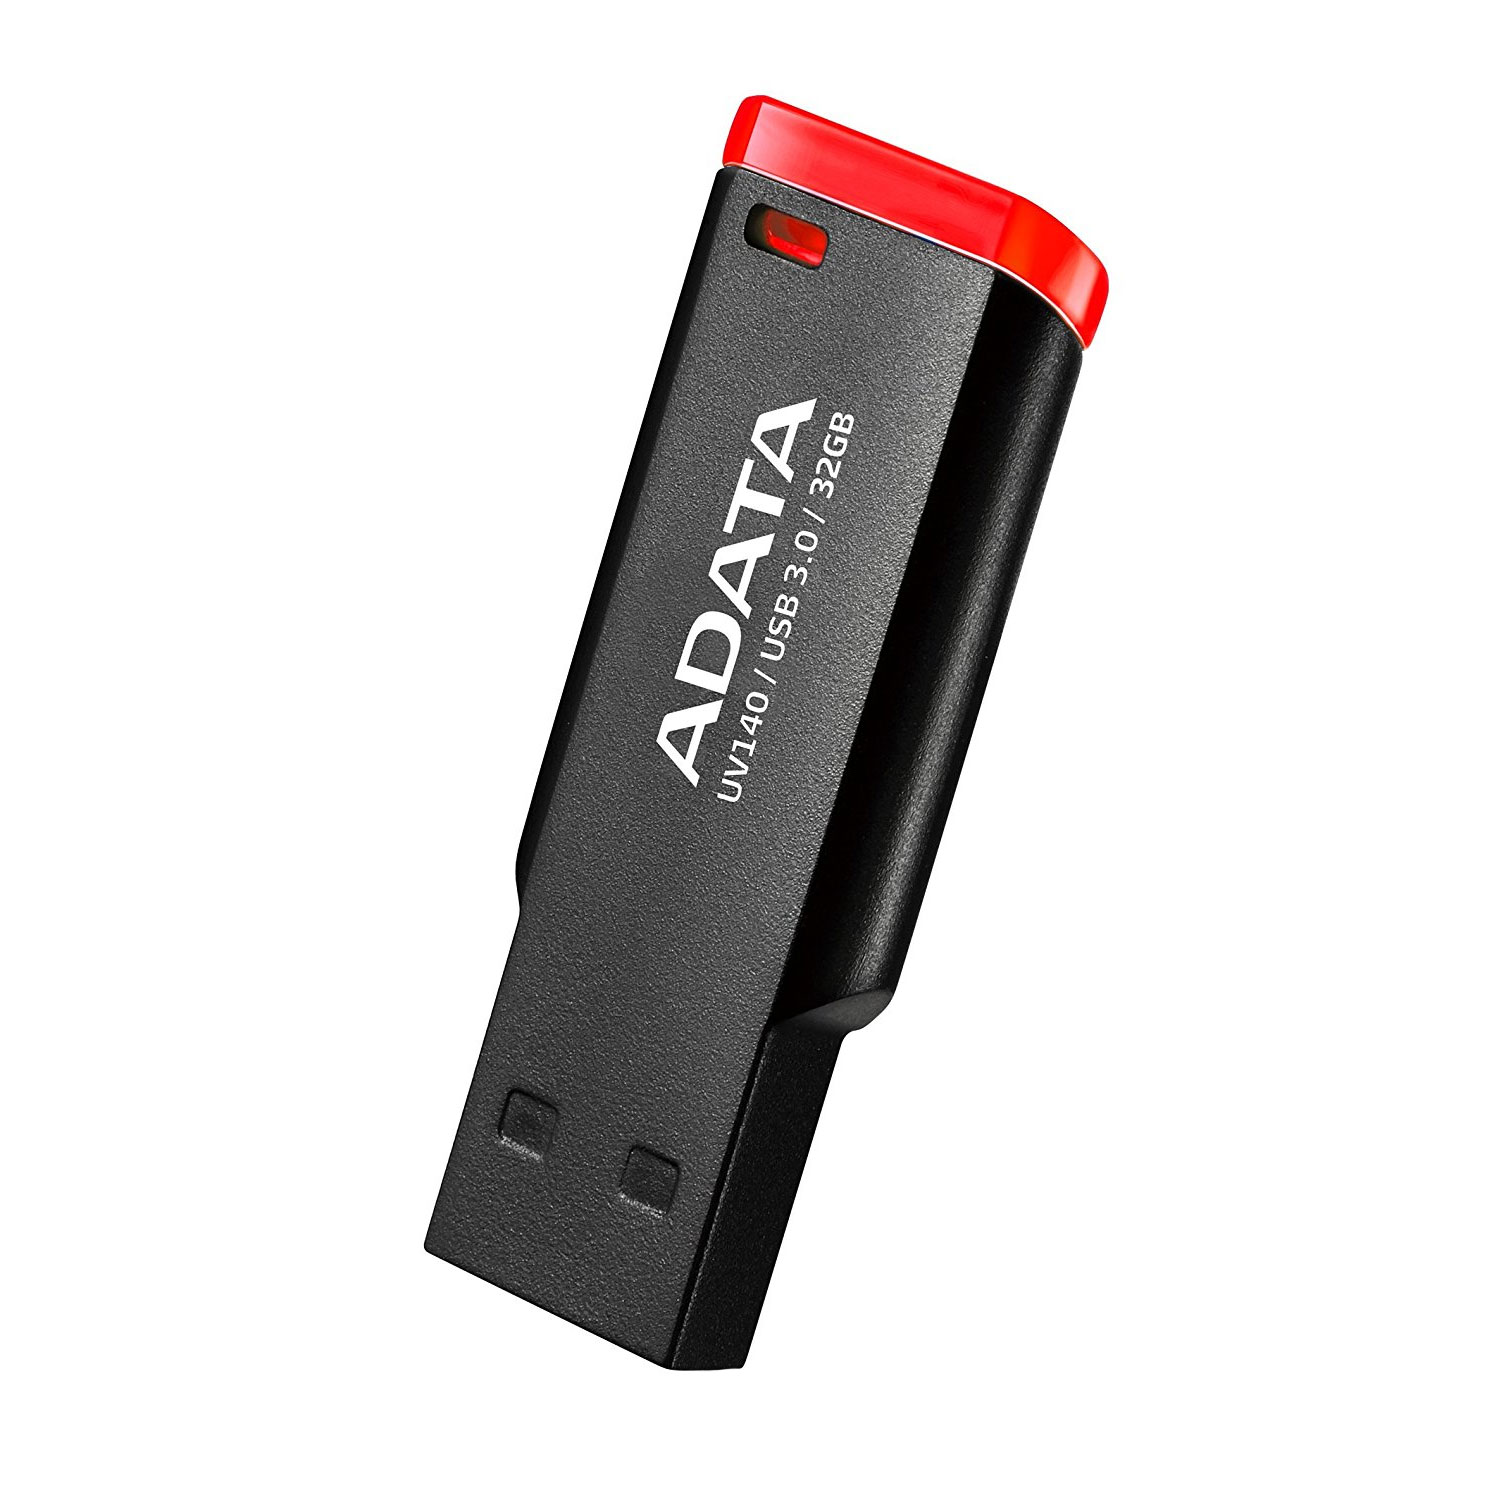  Memorie USB A-DATA AUV140-32G-RKD, 32GB, USB 3.0, Negru 